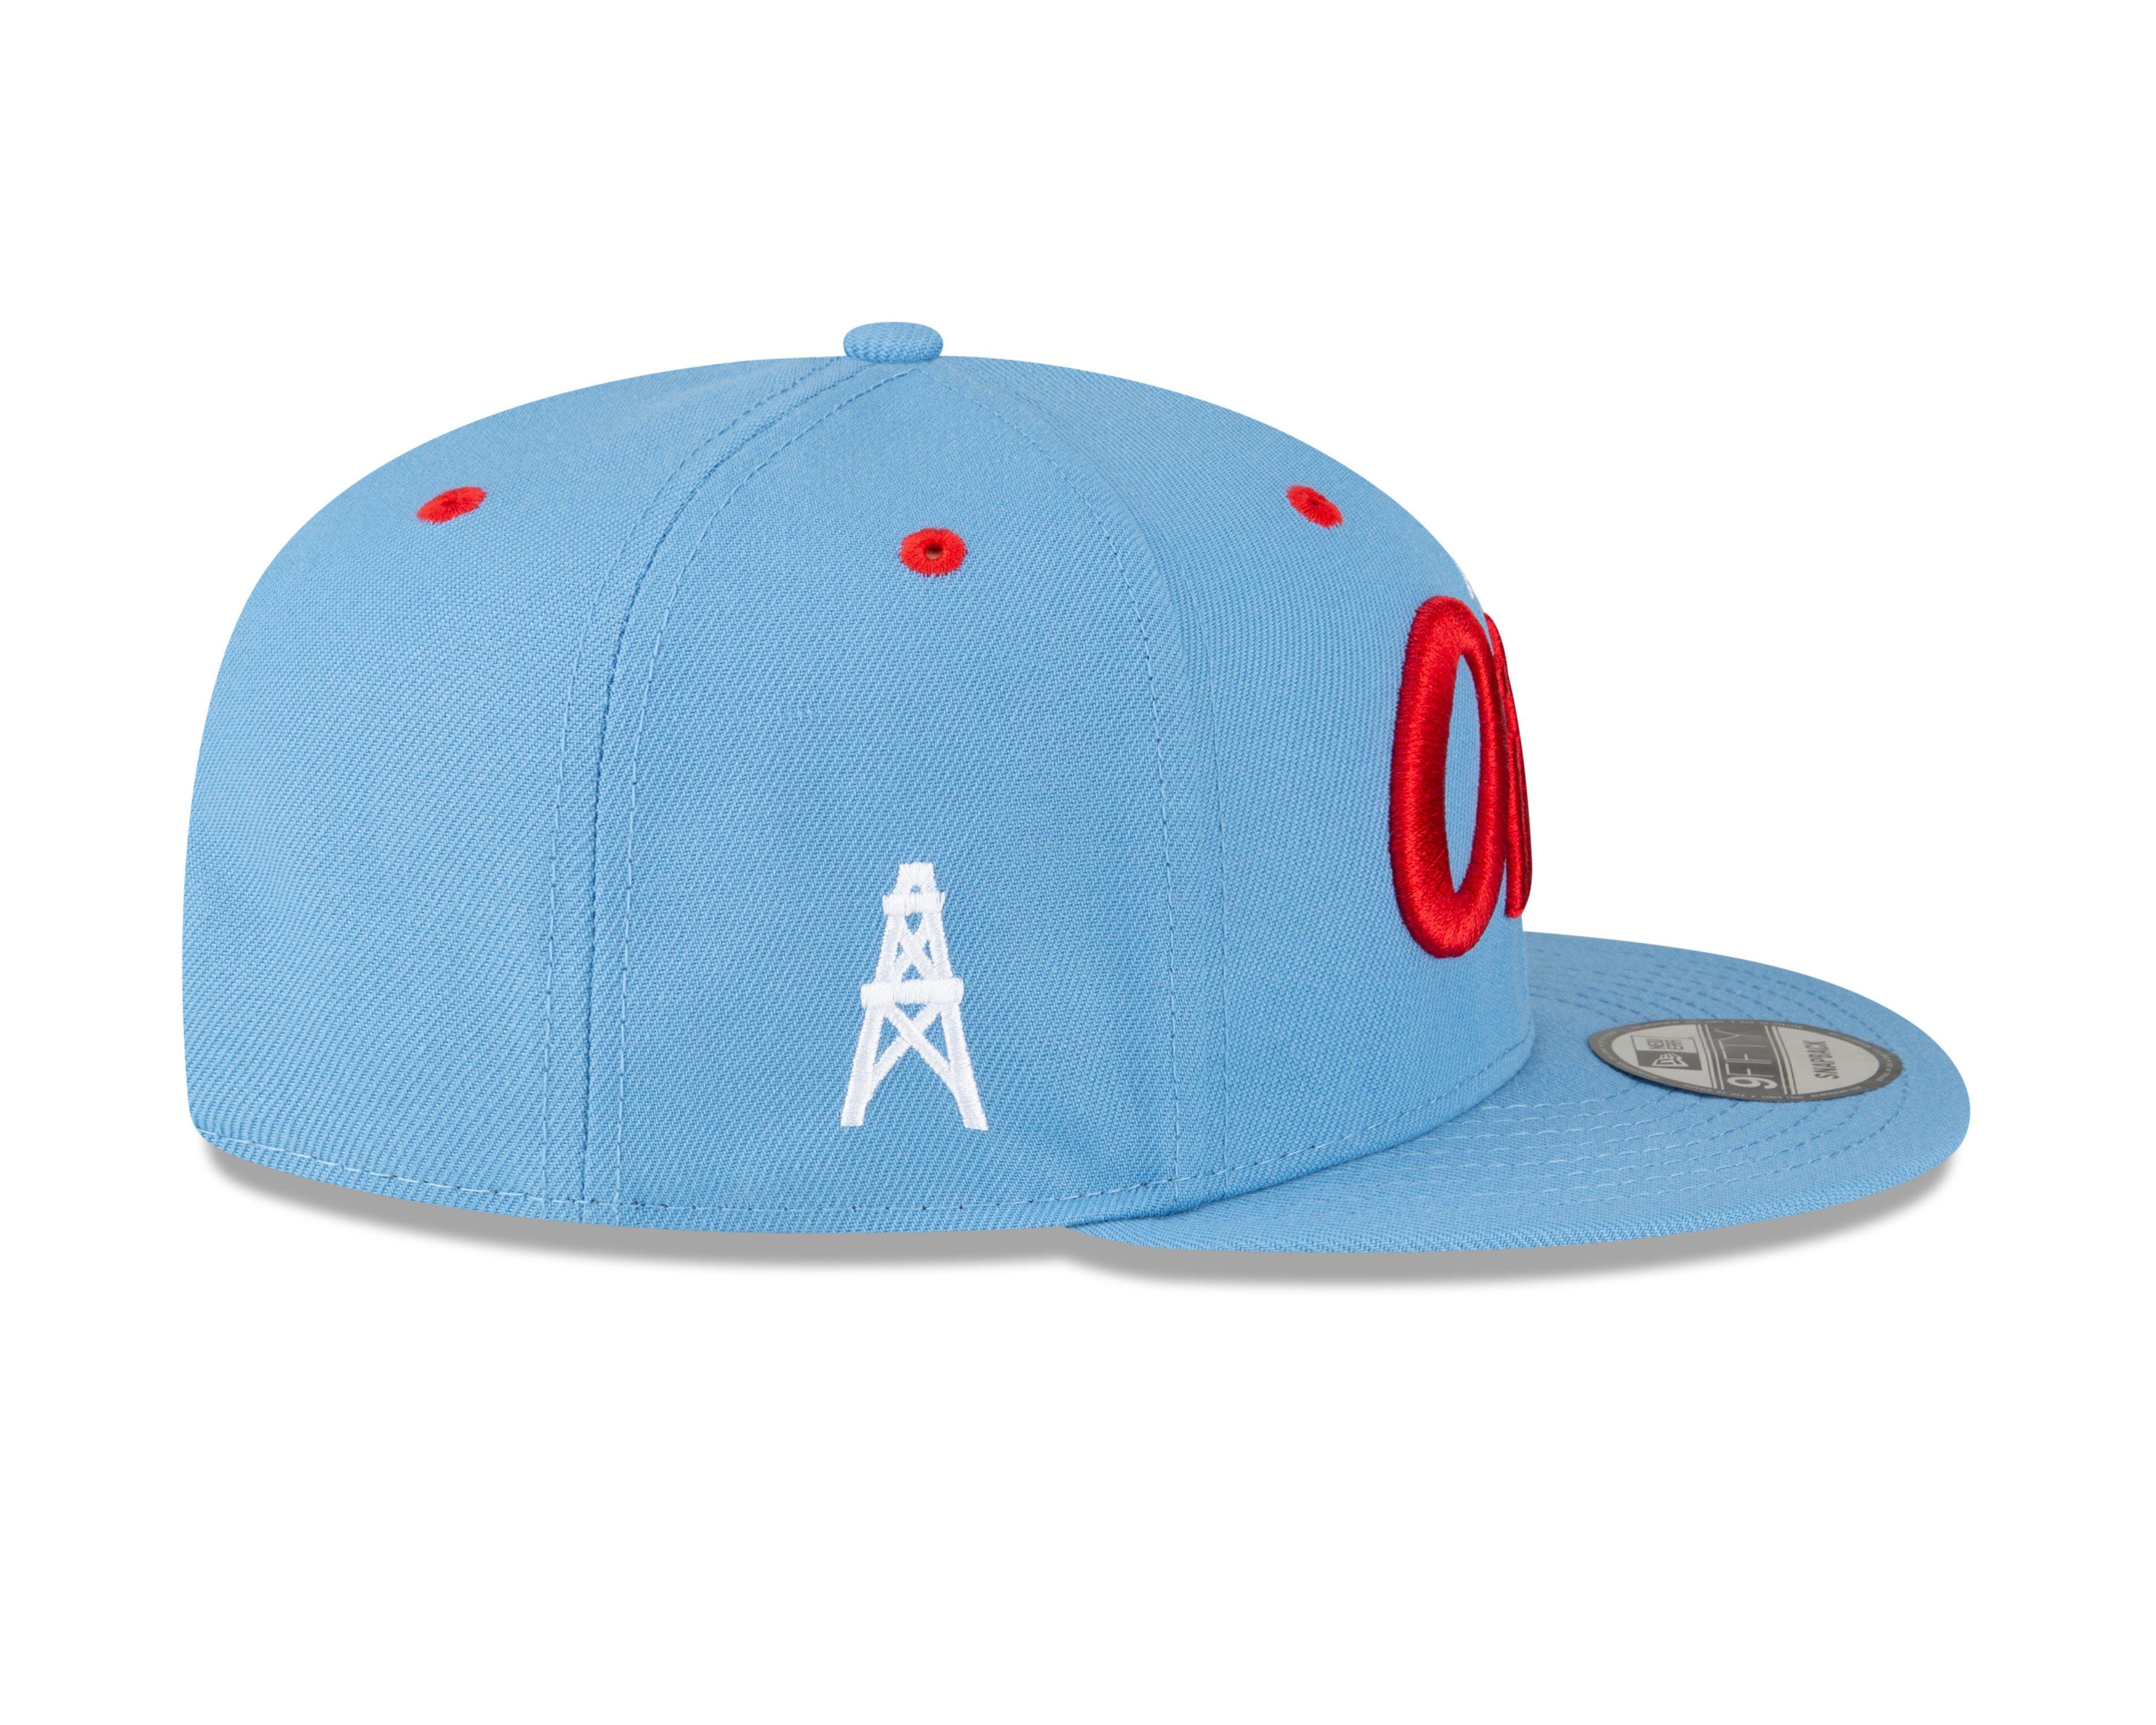 Houston Oilers Retro Sport 3 Tone New Era 9FIFTY Snapback Hat